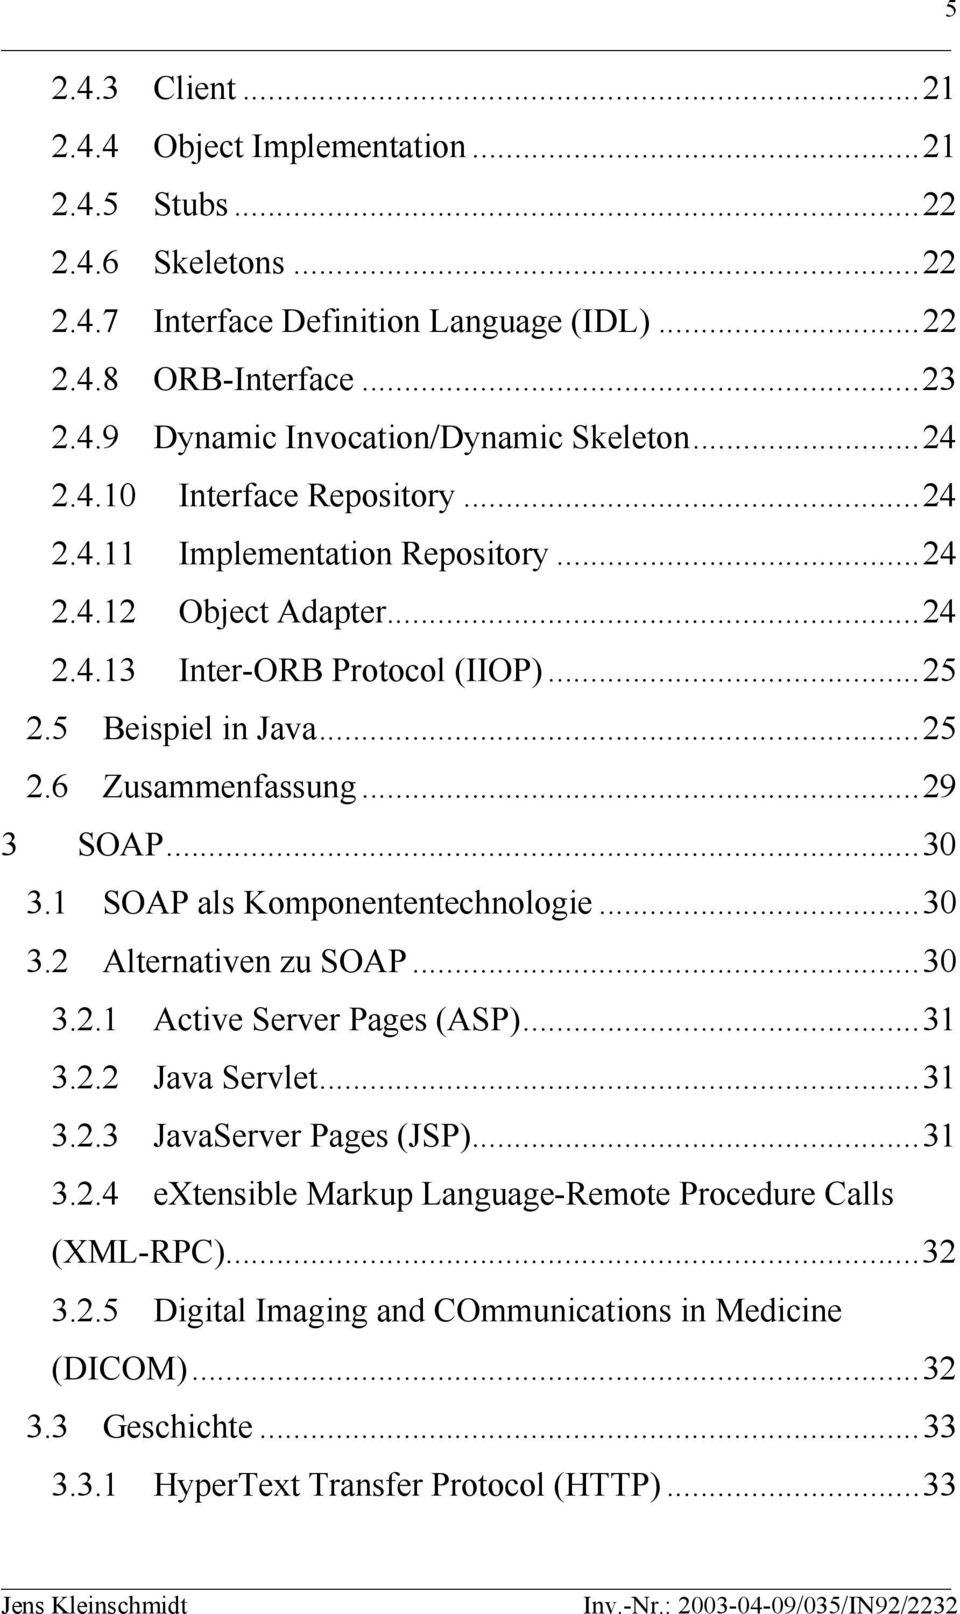 ..29 3 SOAP...30 3.1 SOAP als Komponententechnologie...30 3.2 Alternativen zu SOAP...30 3.2.1 Active Server Pages (ASP)...31 3.2.2 Java Servlet...31 3.2.3 JavaServer Pages (JSP)...31 3.2.4 extensible Markup Language-Remote Procedure Calls (XML-RPC).